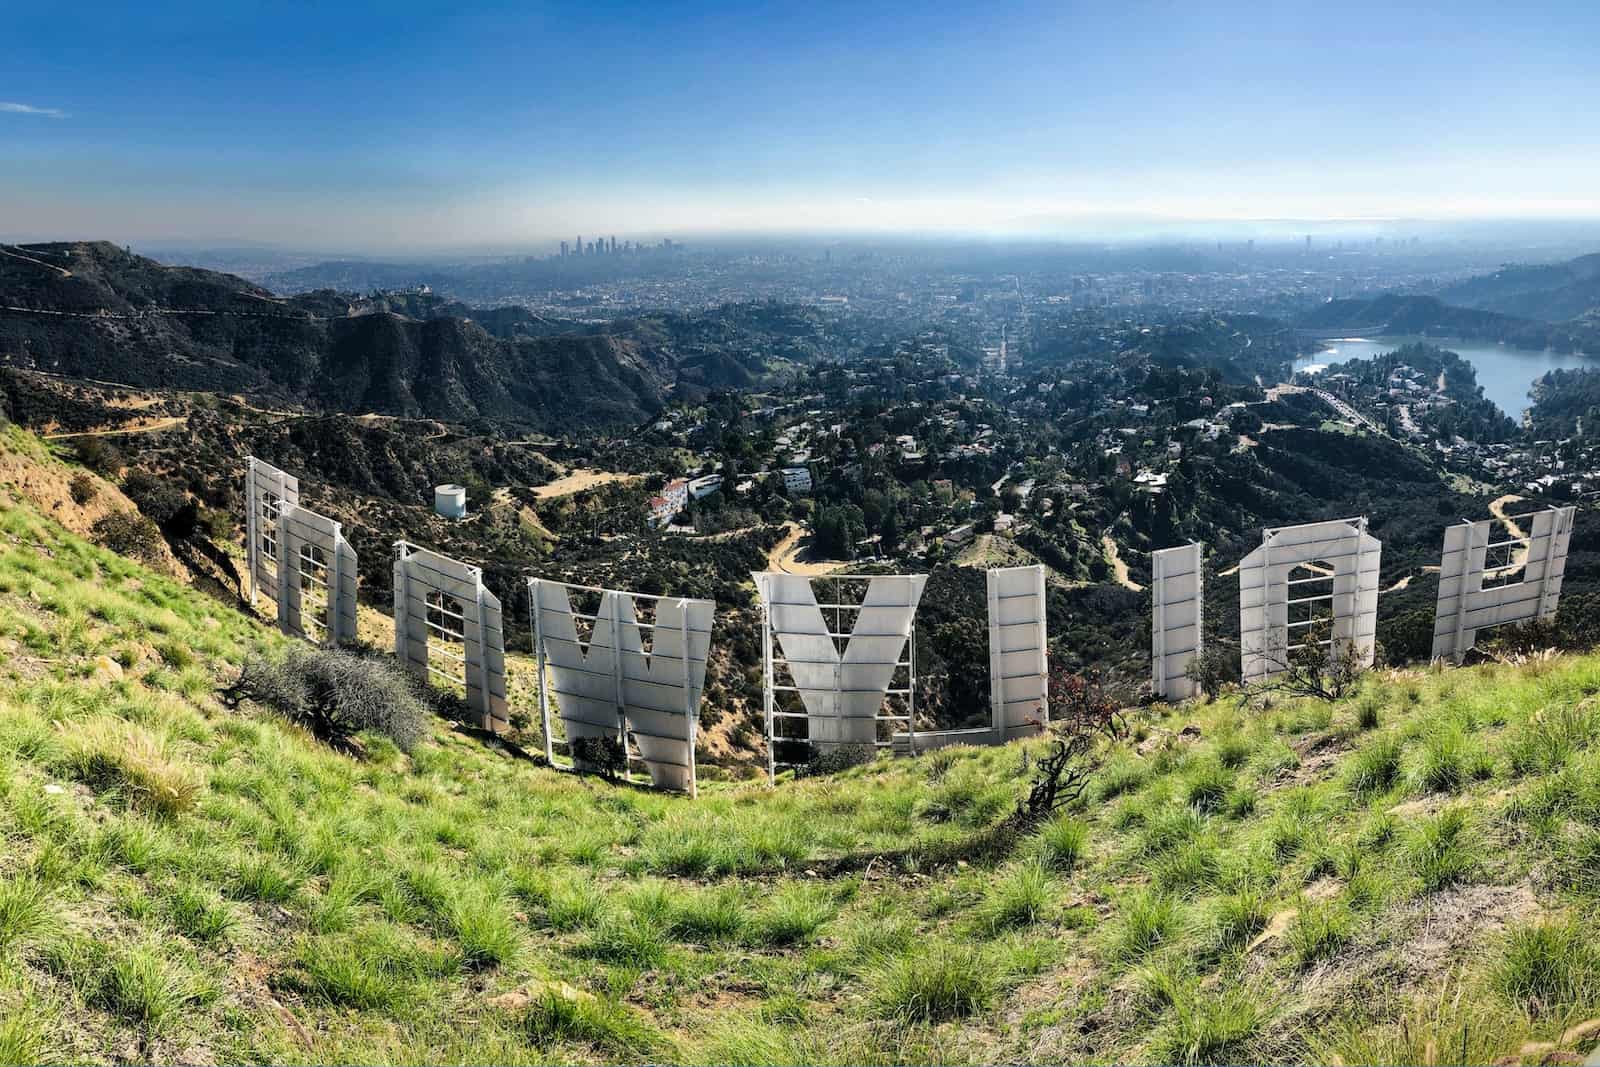 Hollywood Hills